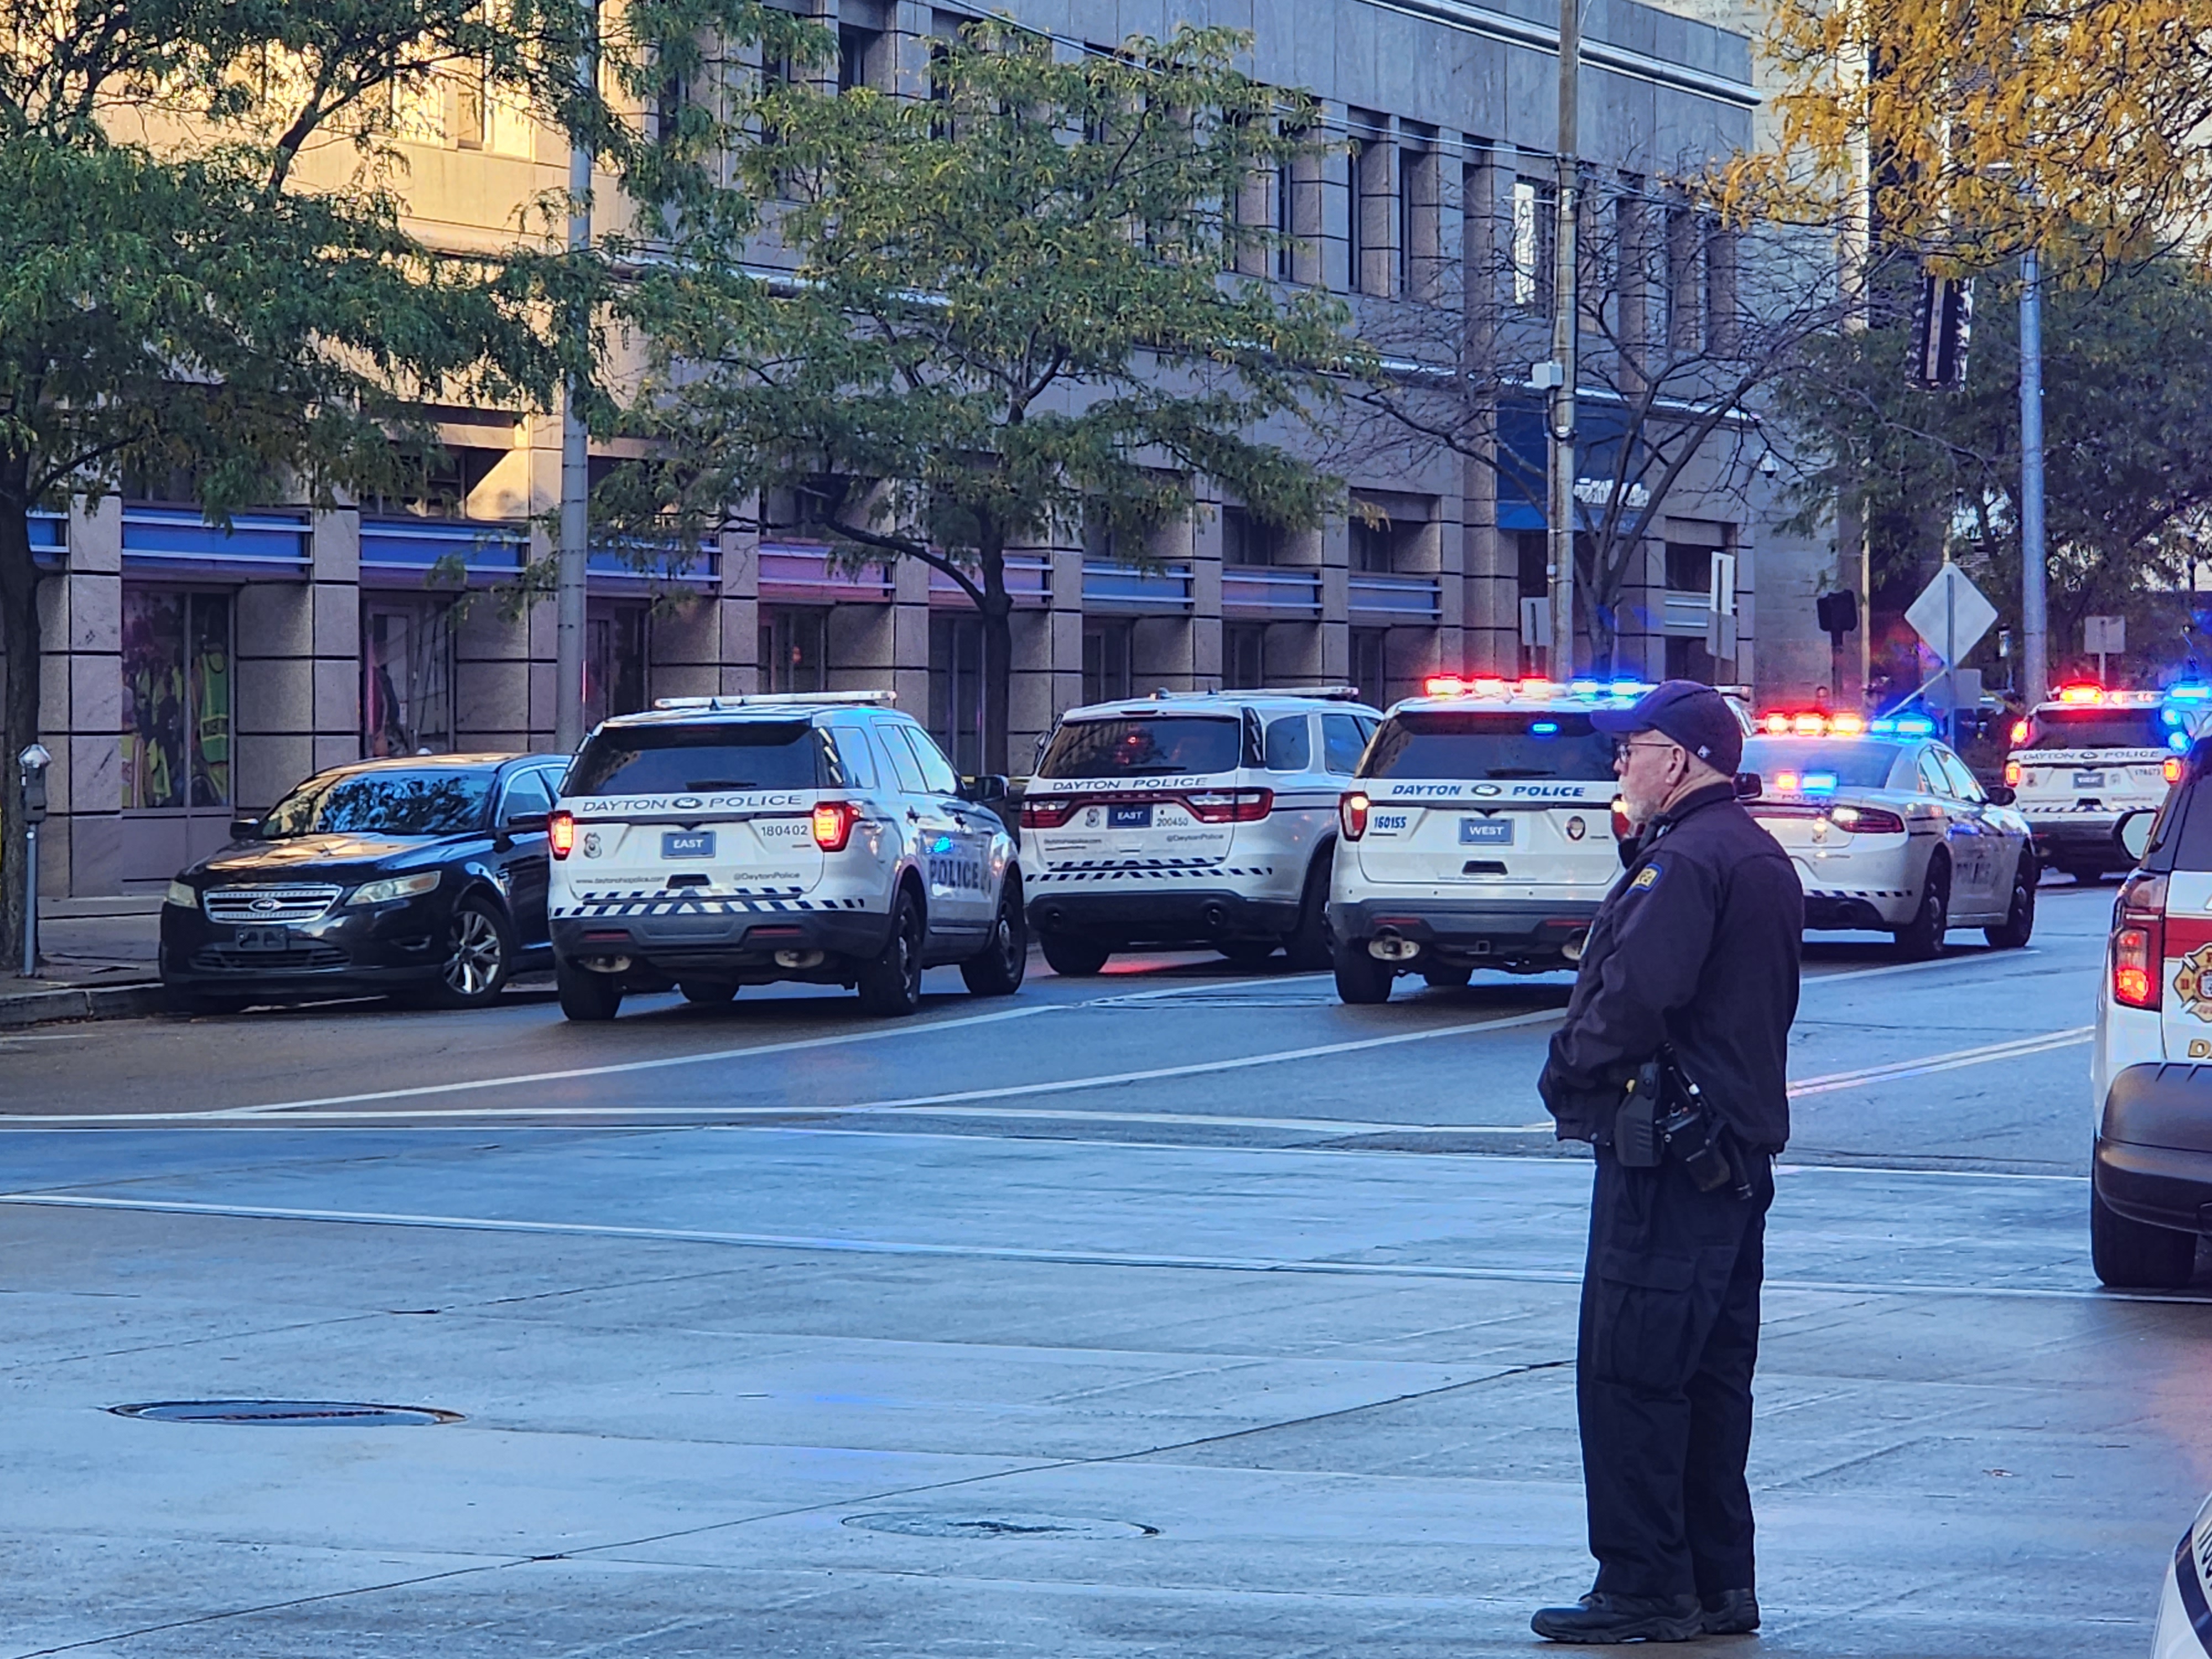 PHOTOS: Large police presence responding in downtown Dayton – WHIO